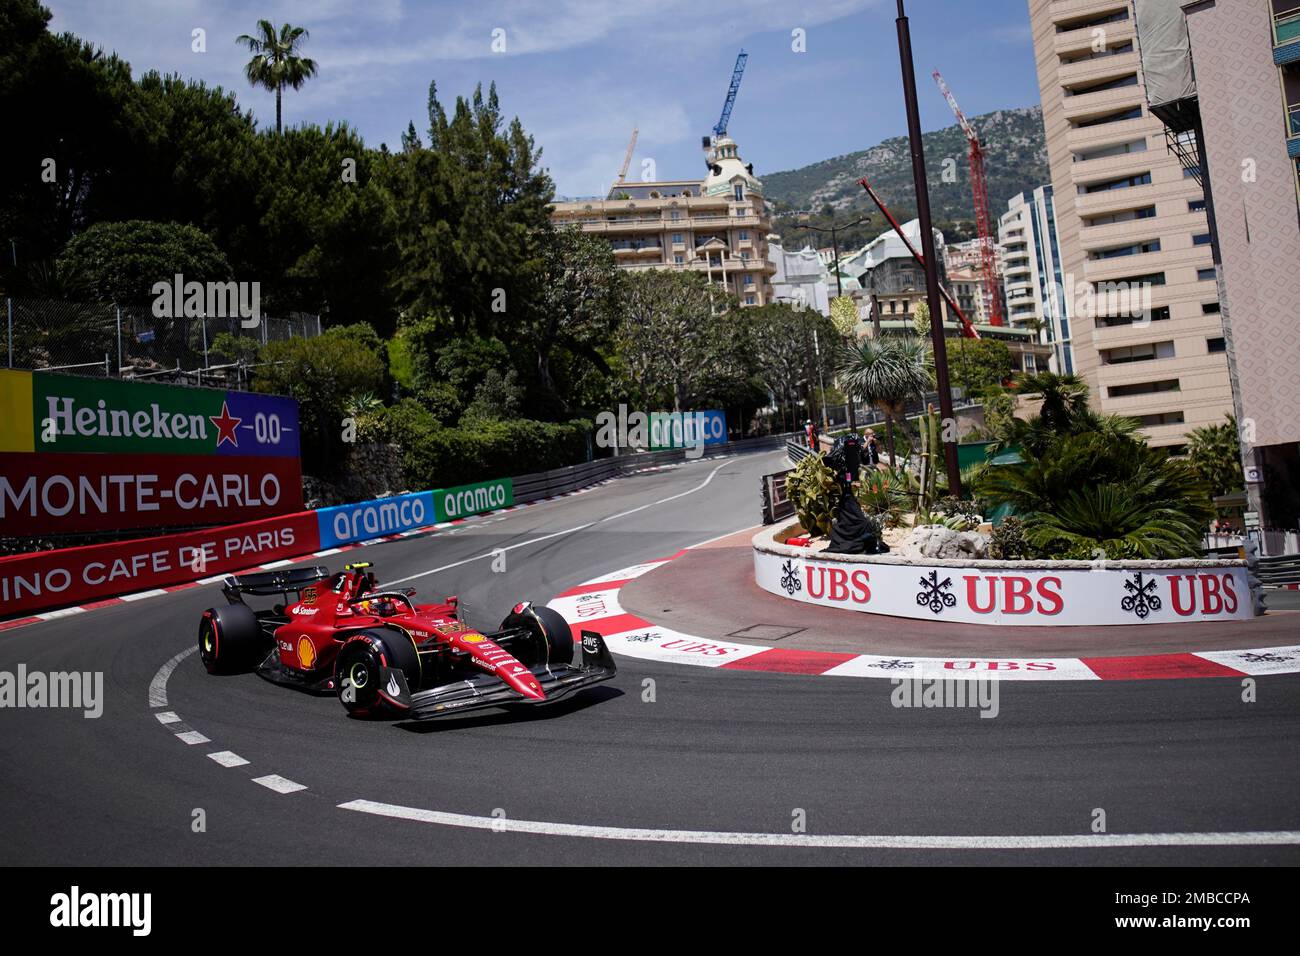 Ferrari driver Carlos Sainz of Spain steers his car during the third free practice at the Monaco racetrack, in Monaco, Saturday, May 28, 2022